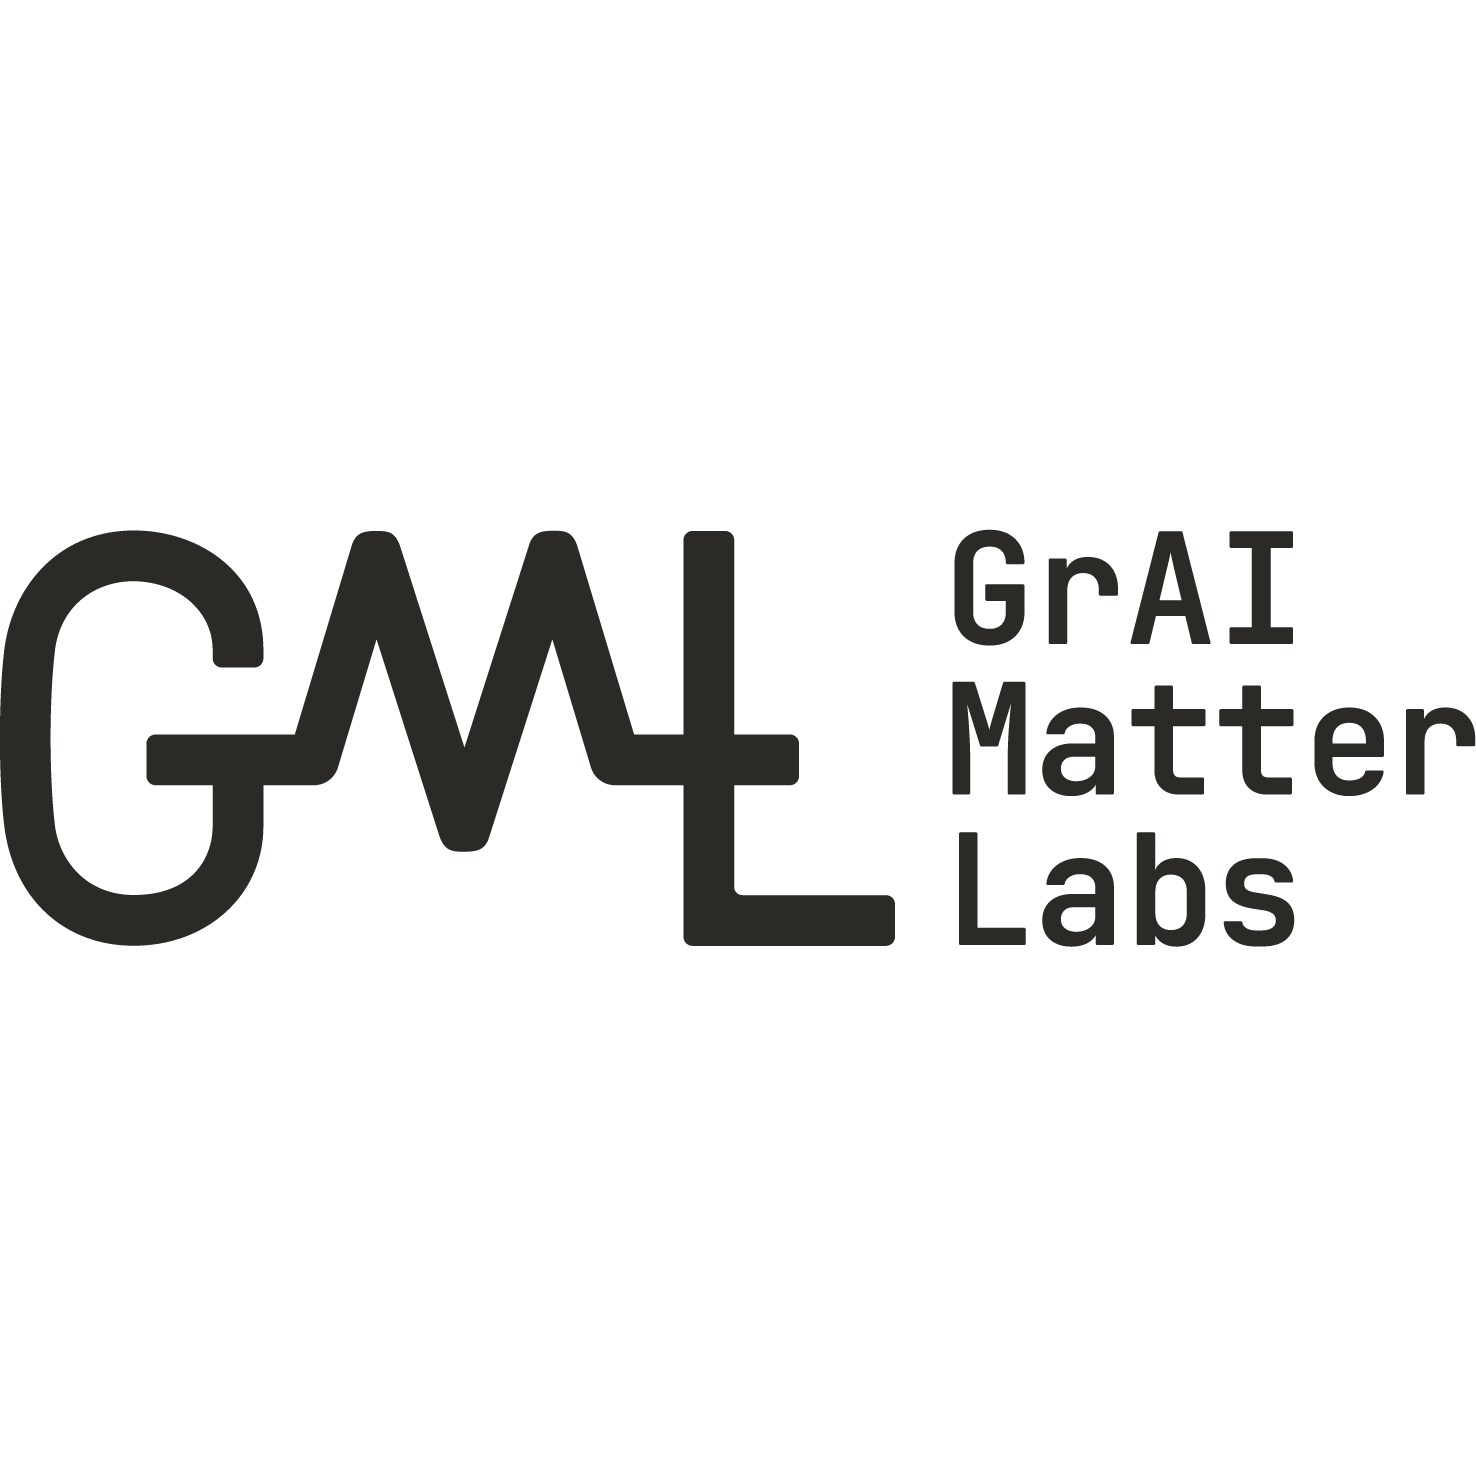 GrAI Matter Labs